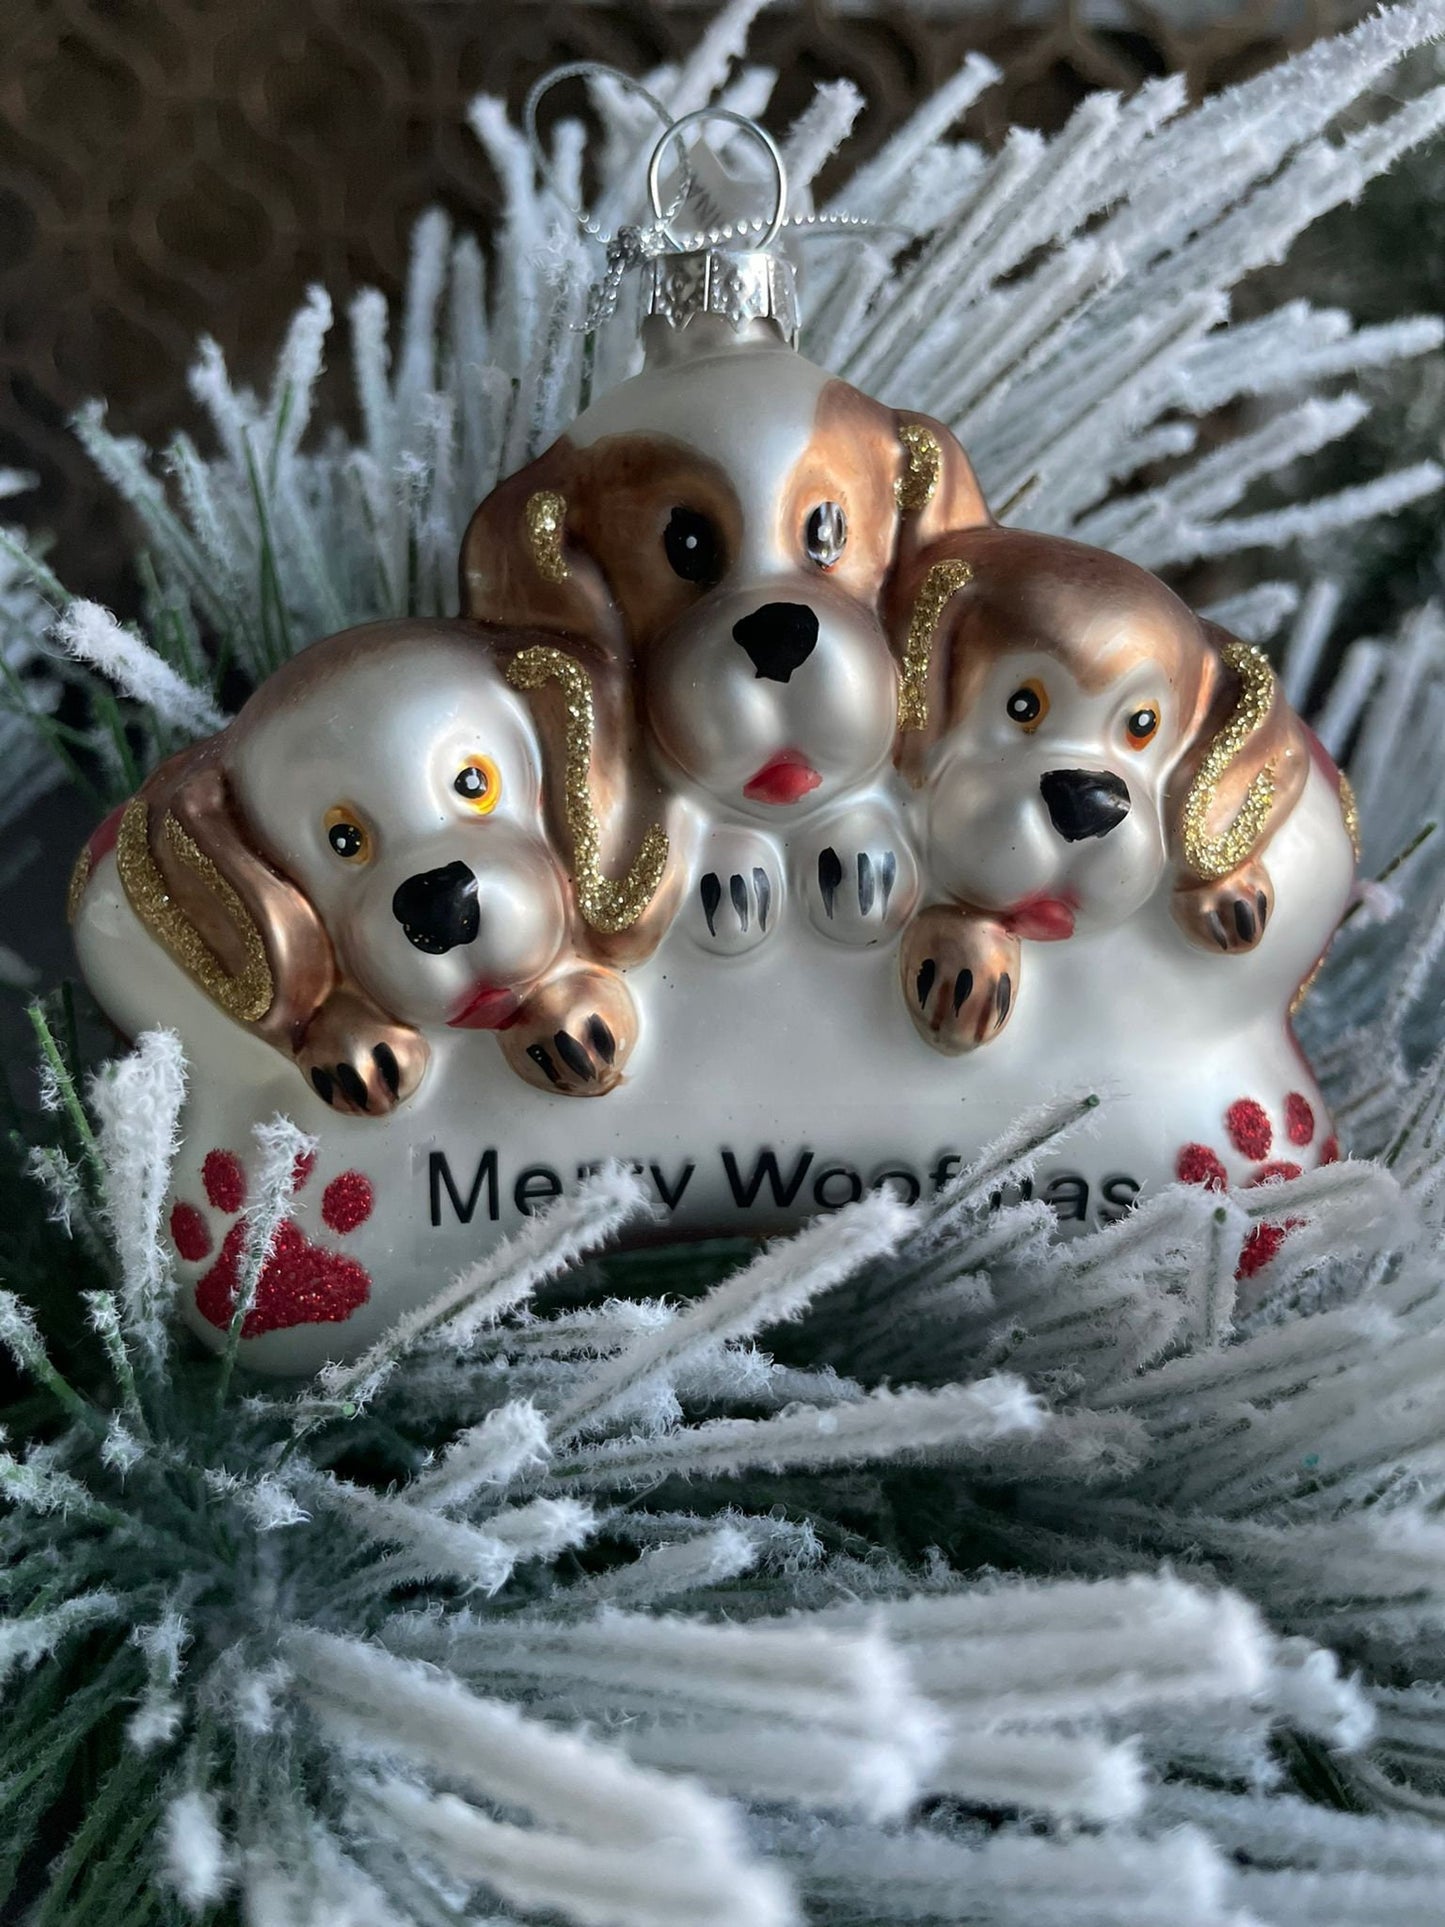 4" glass dogs "merry woofmas" bone ornament.